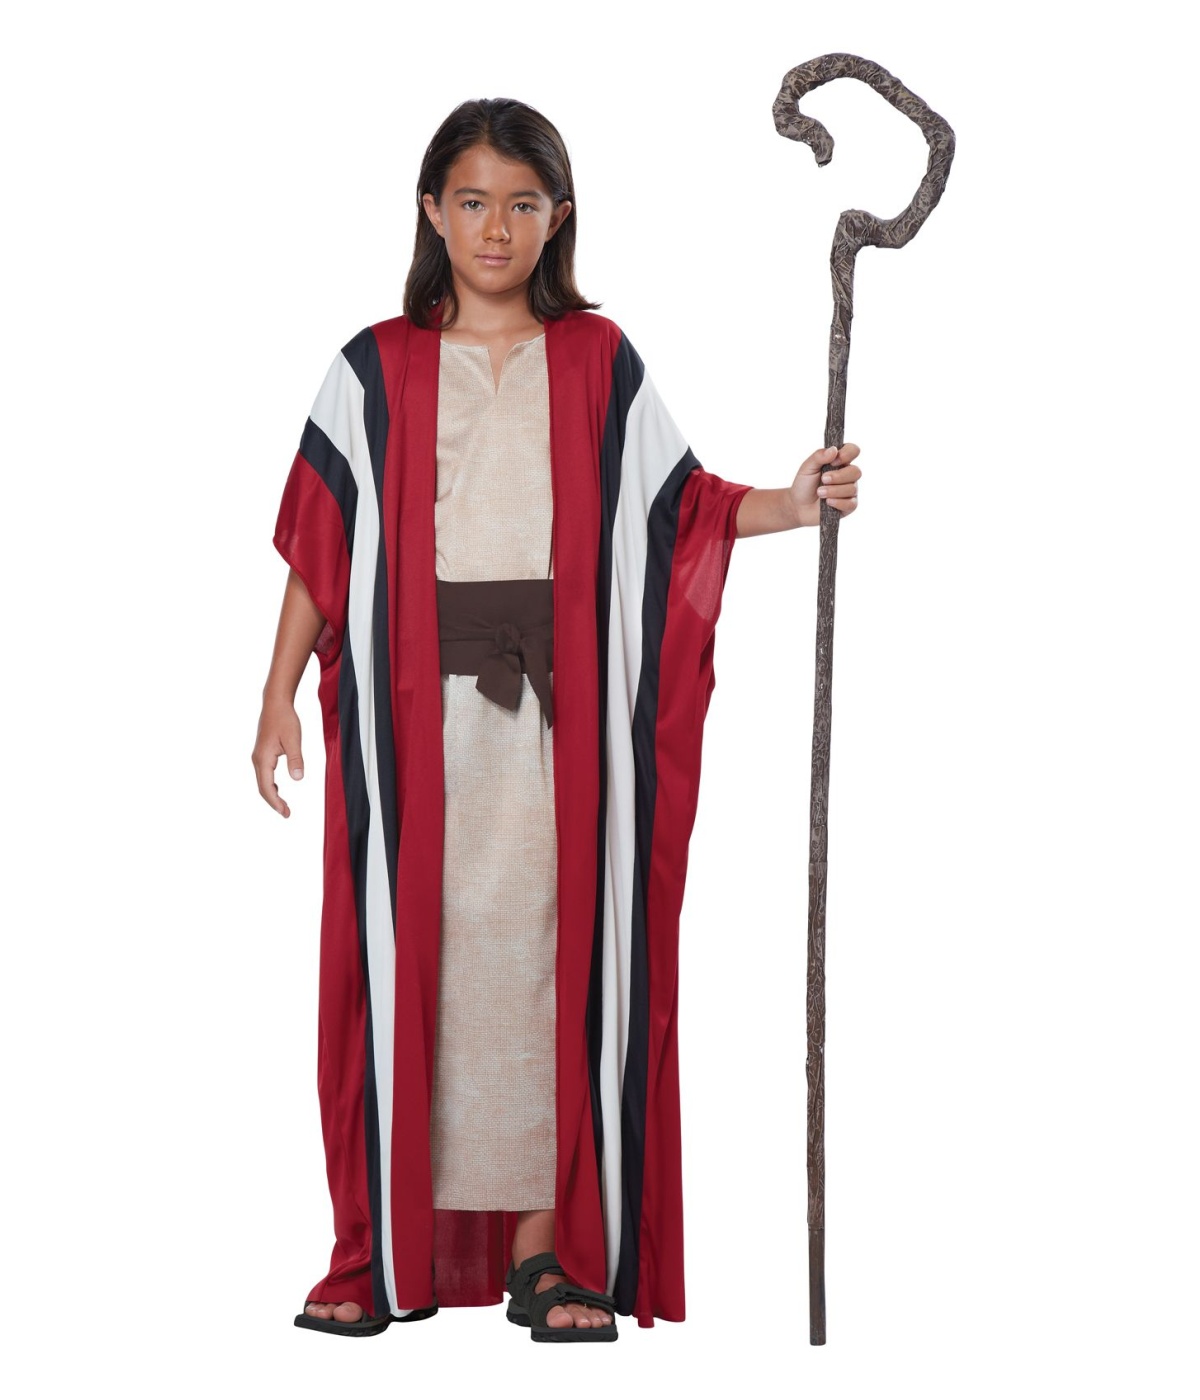  Boys Moses Biblical Shepherd Costume